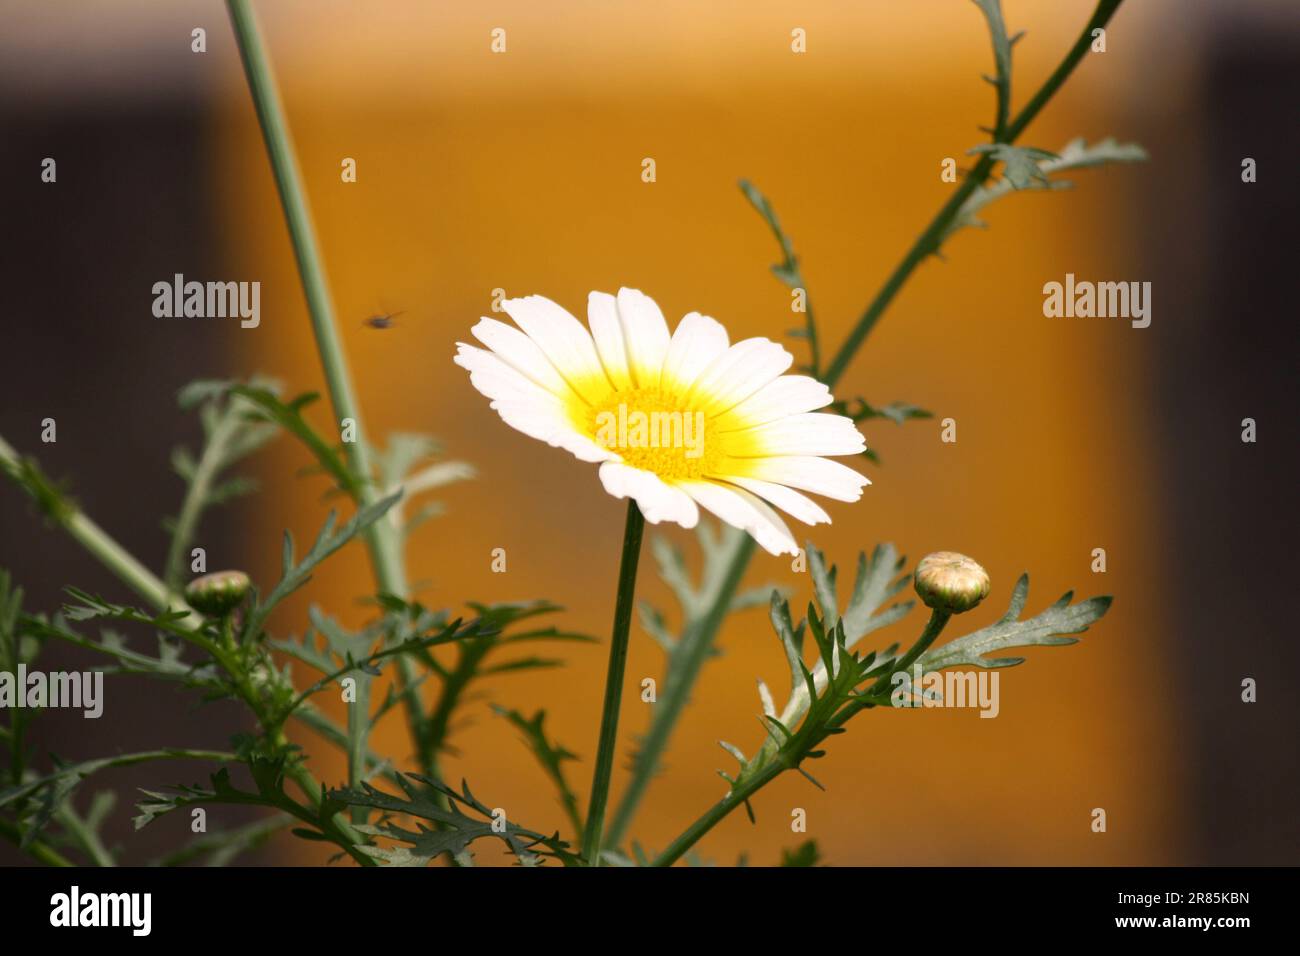 Crown daisy or edible chrysanthemum (Glebionis coronaria) in bloom : (pix Sanjiv Shukla) Stock Photo